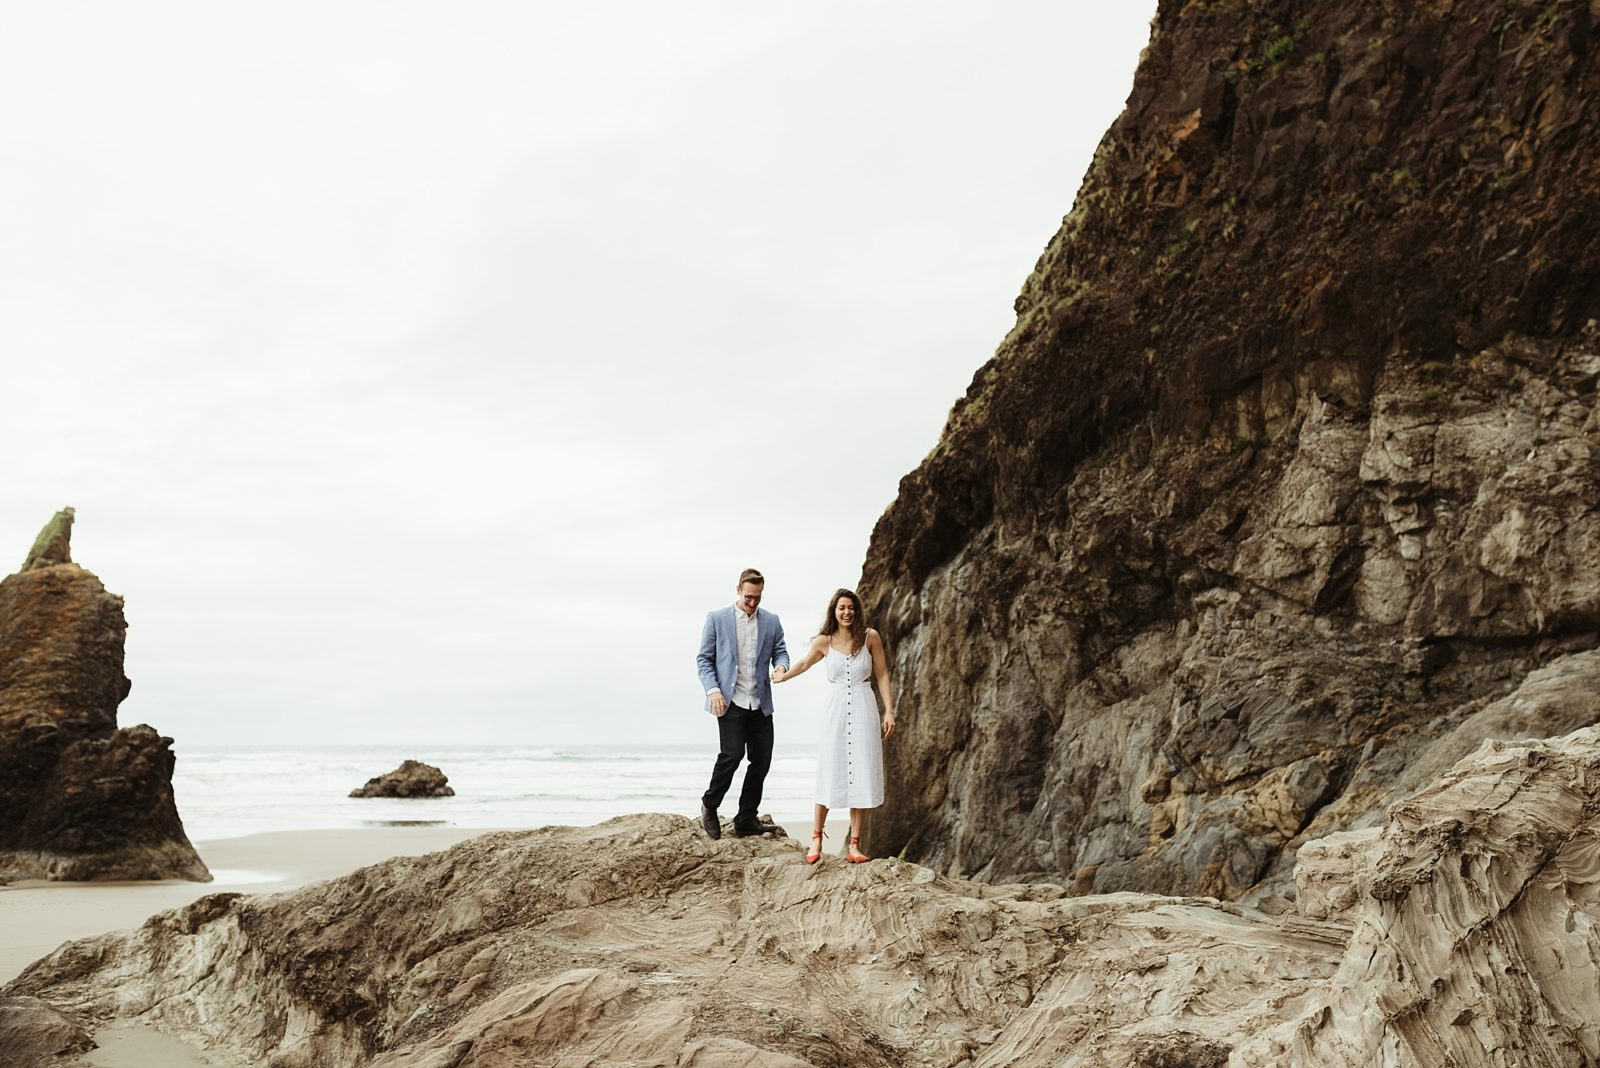 Stylish couple playing on rock at Hug Point on the Oregon Coast during engagement session